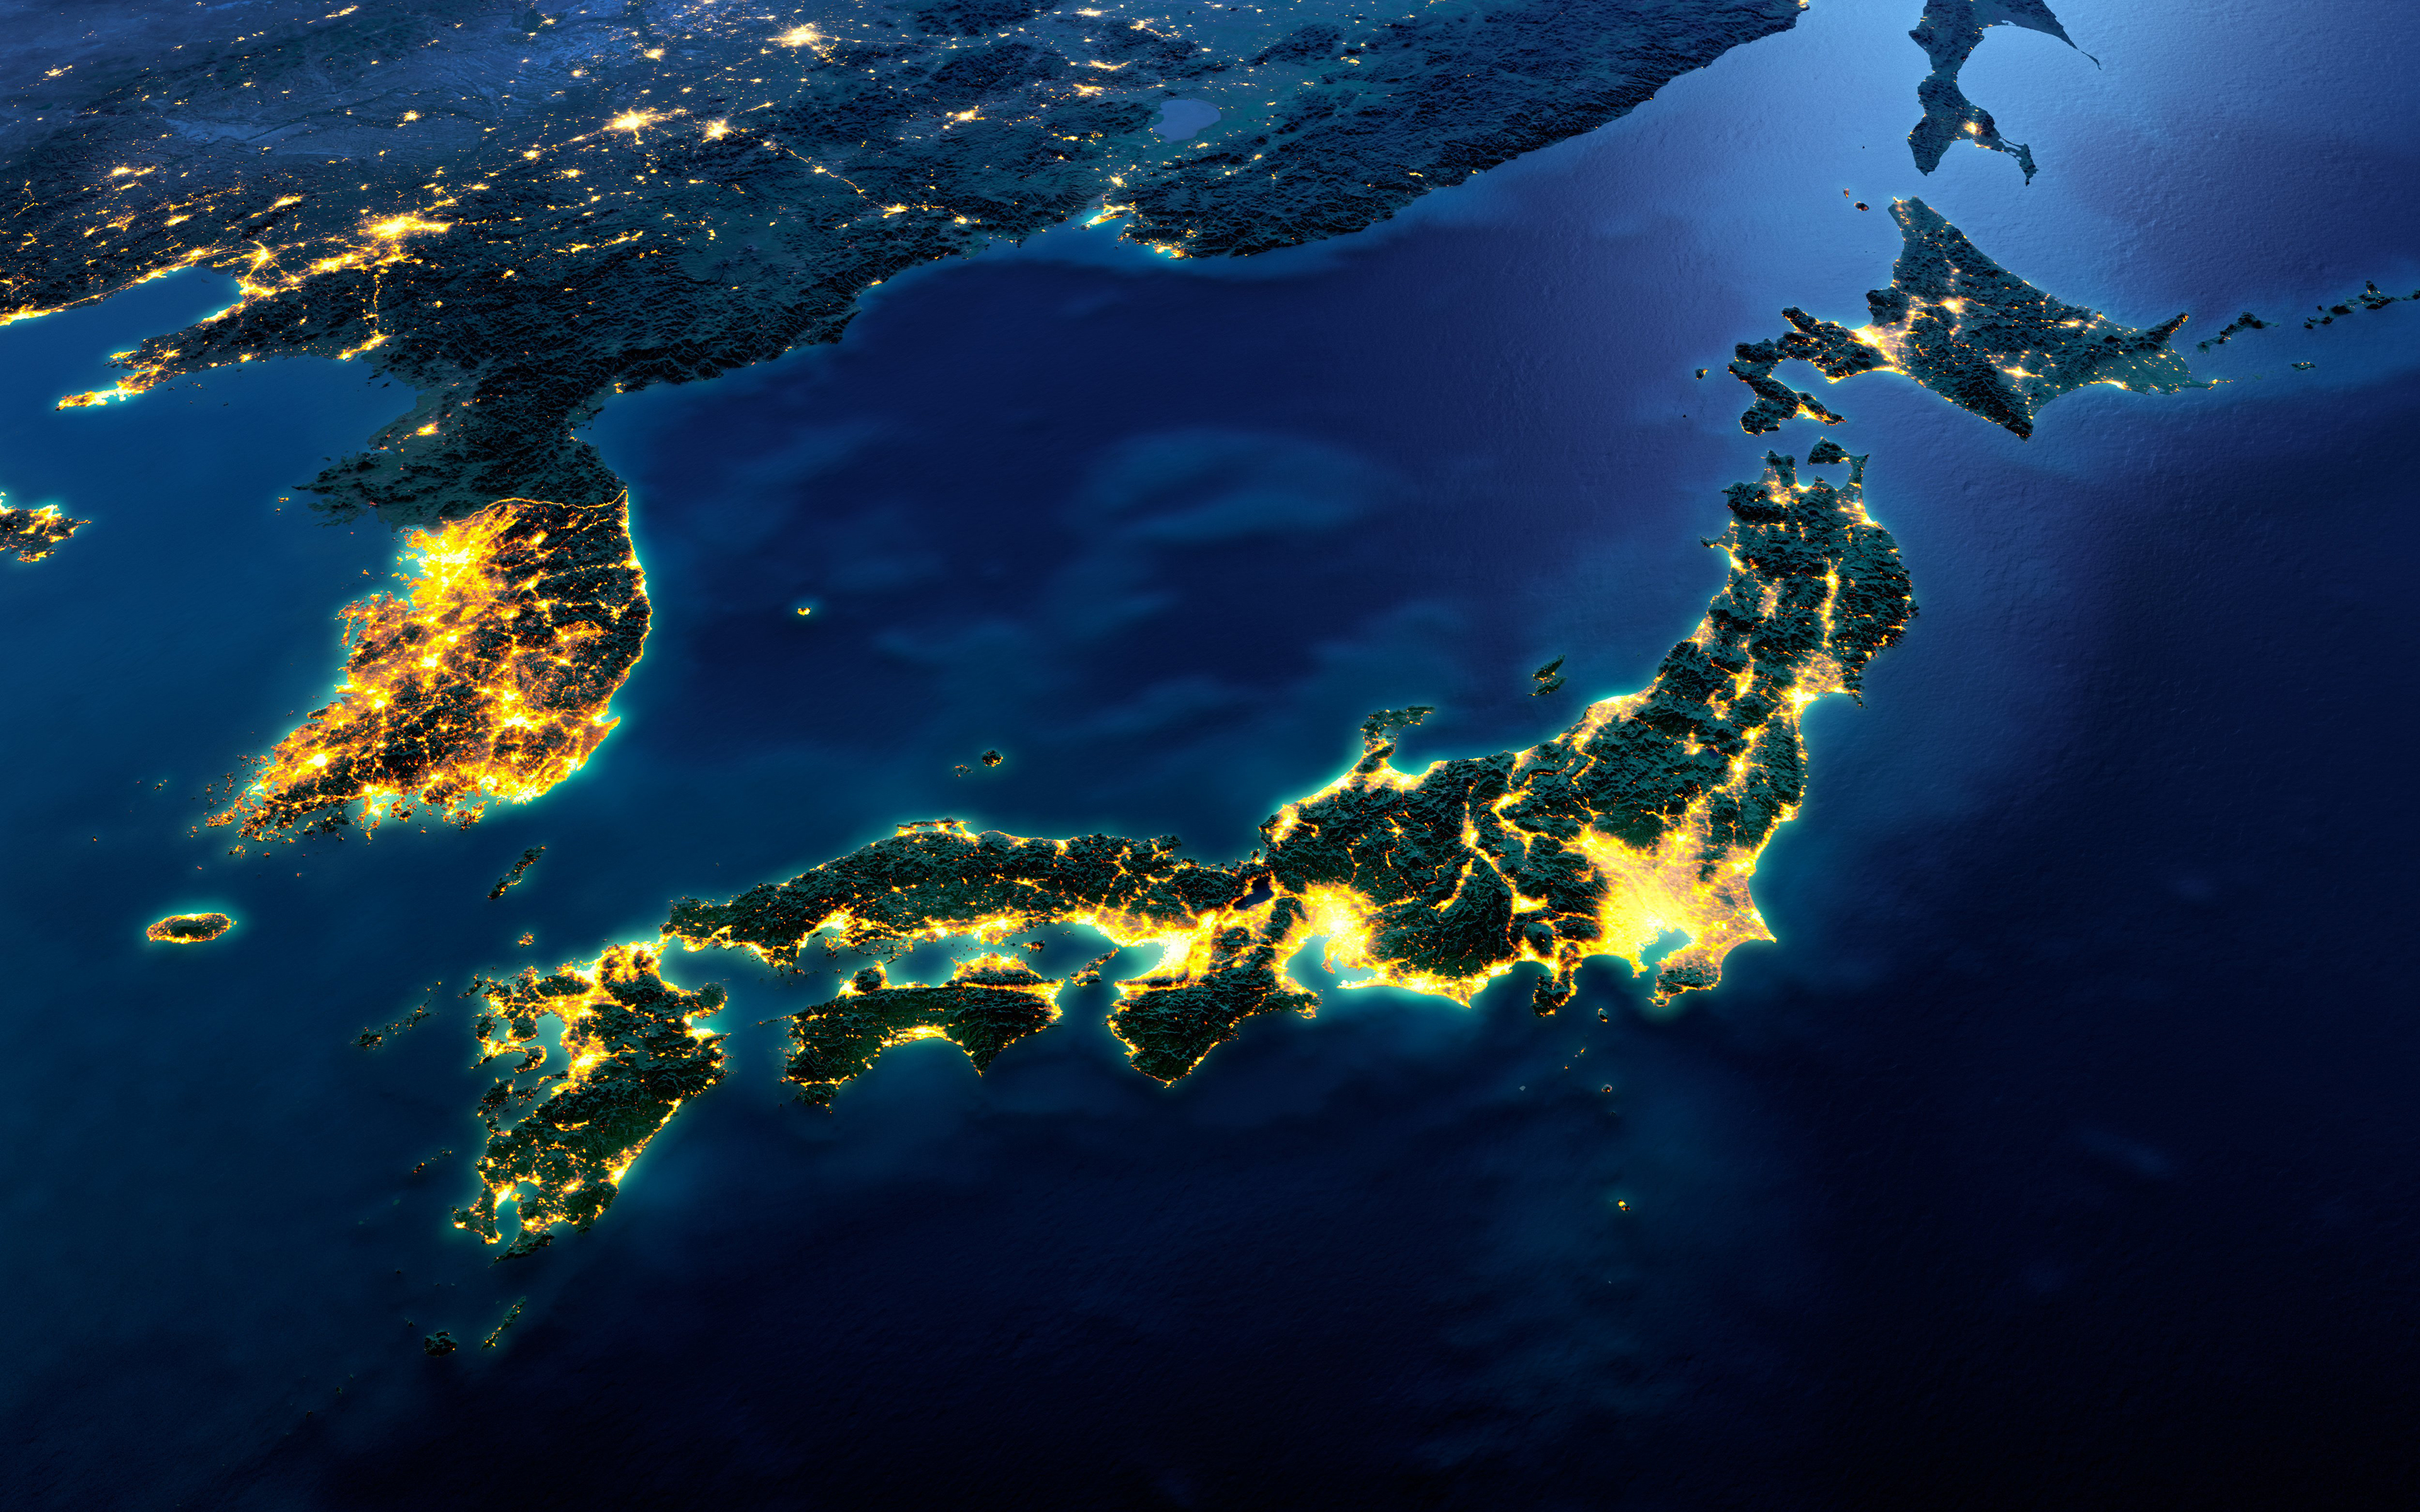 Space Countries City Lights Pacific Ocean North Korea China Satellite Photo Japan South Korea Russia 3840x2400